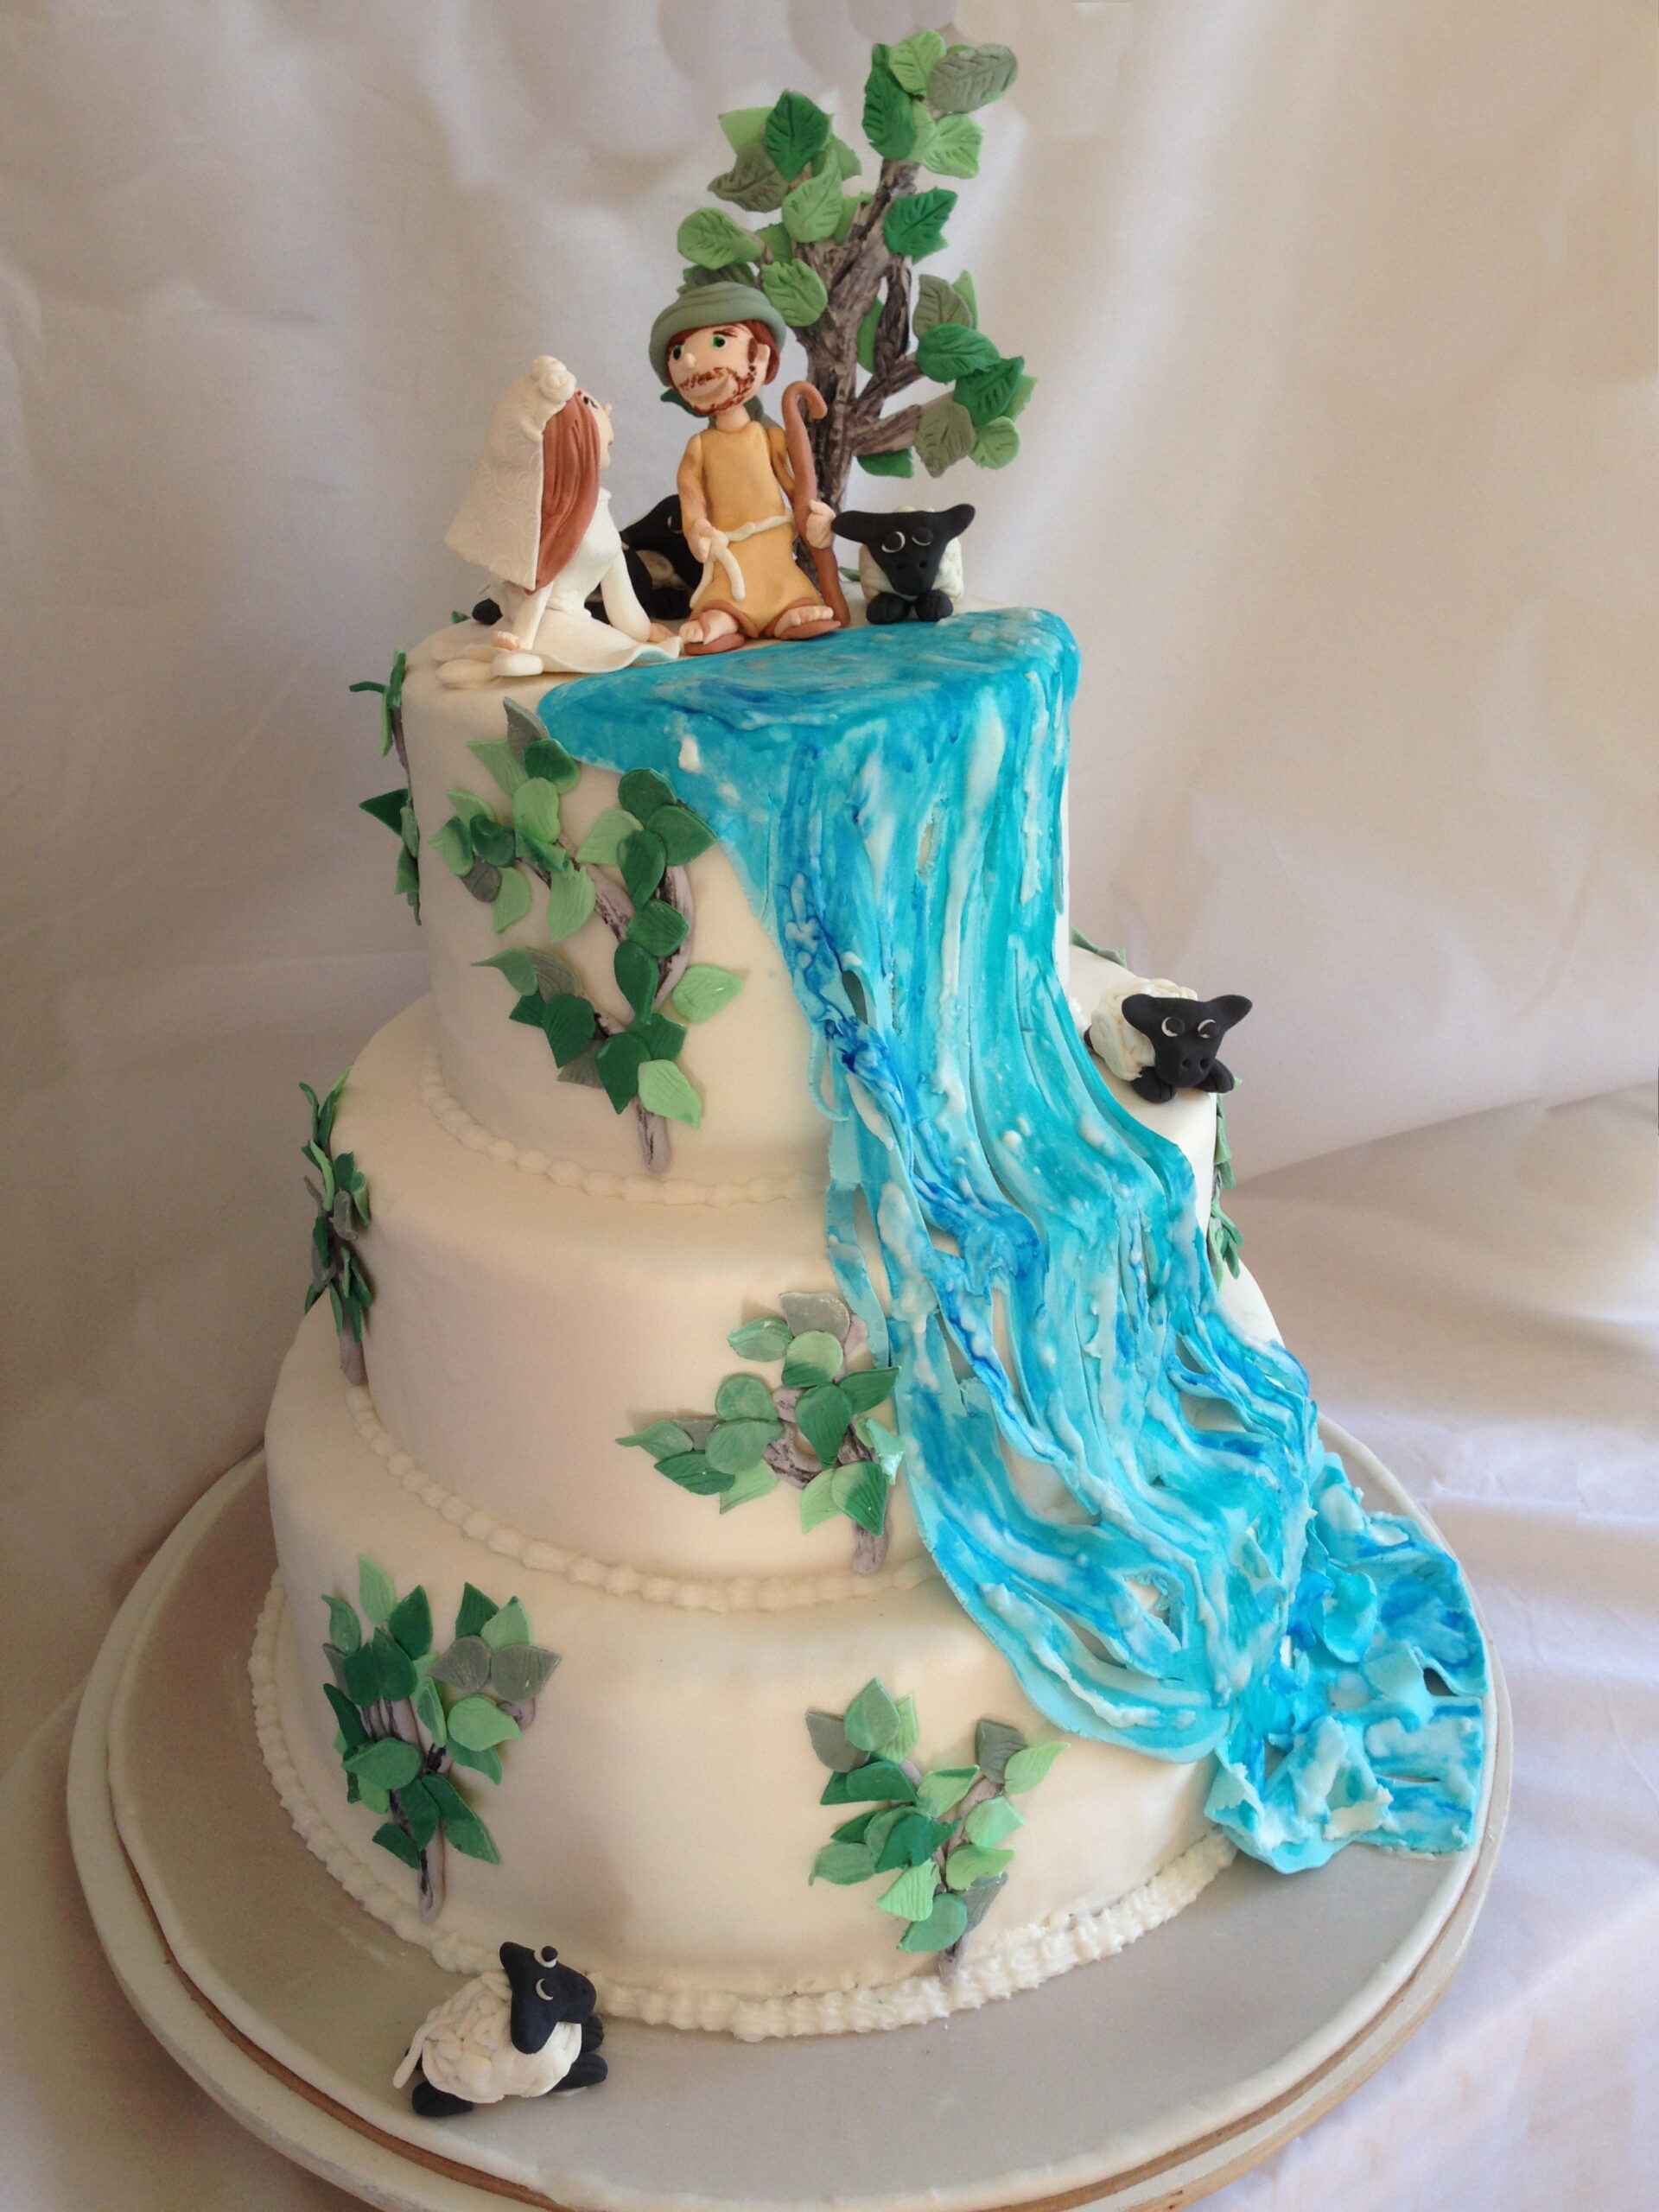 Safari Theme Waterfall Cake | Cake Tutorial | The Cake Studios - YouTube